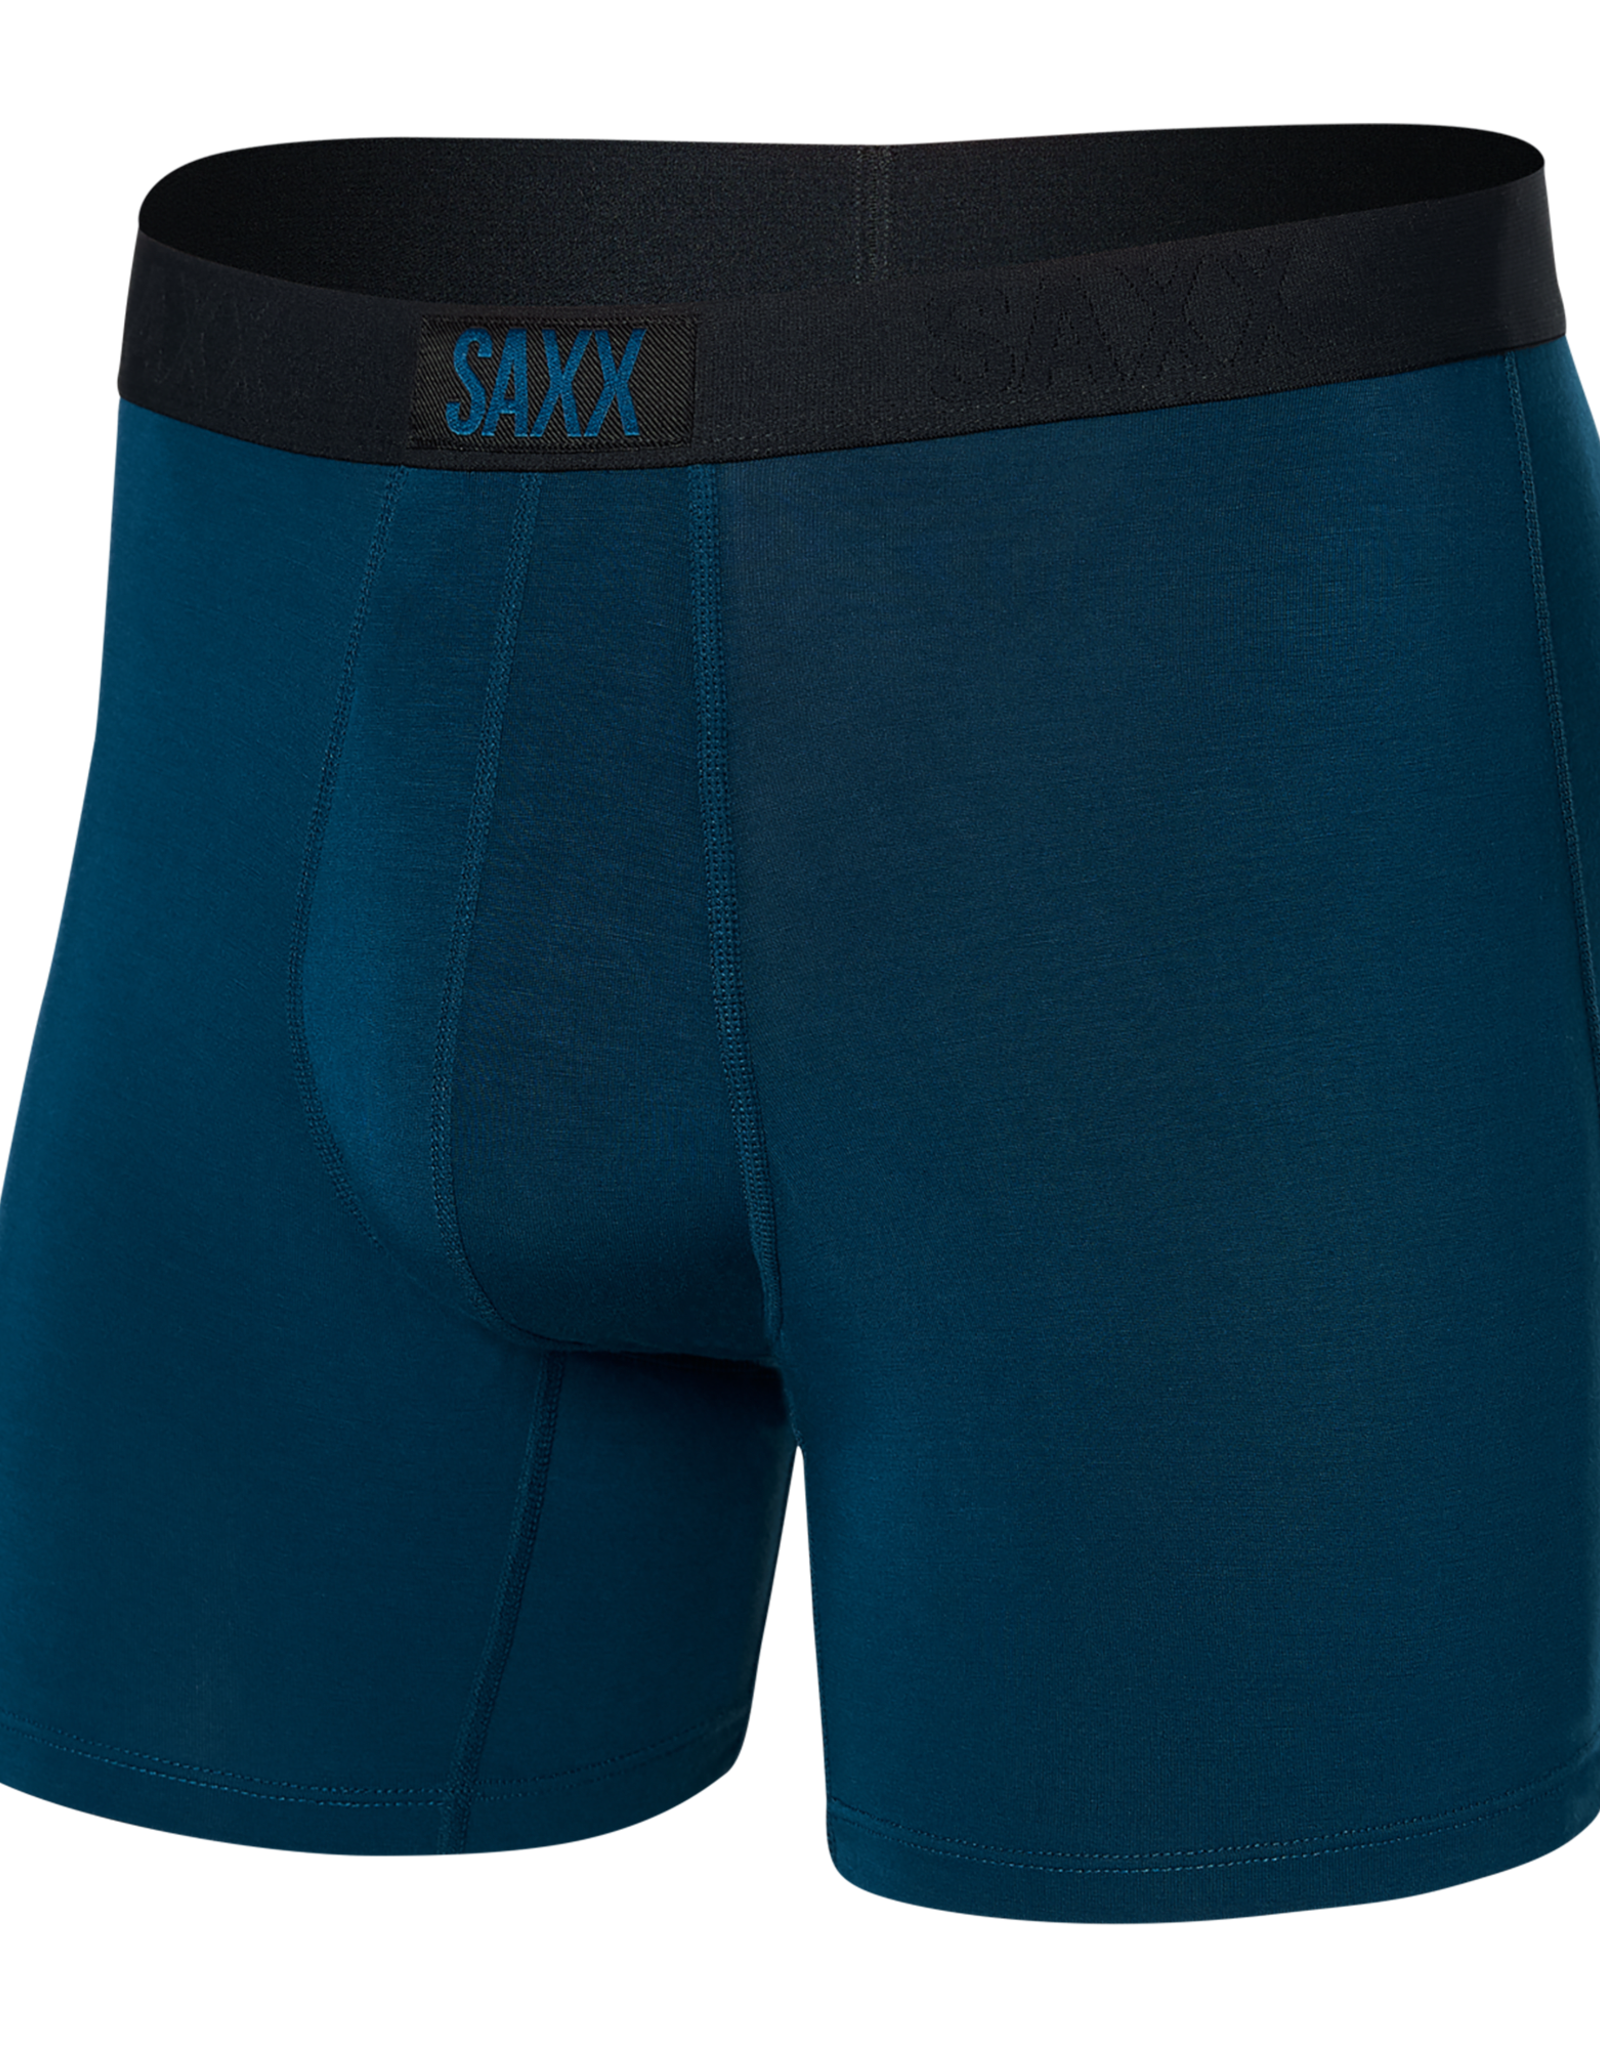 Vibe Boxer Brief in Navy Duel by SAXX Underwear Co. - Hansen's Clothing